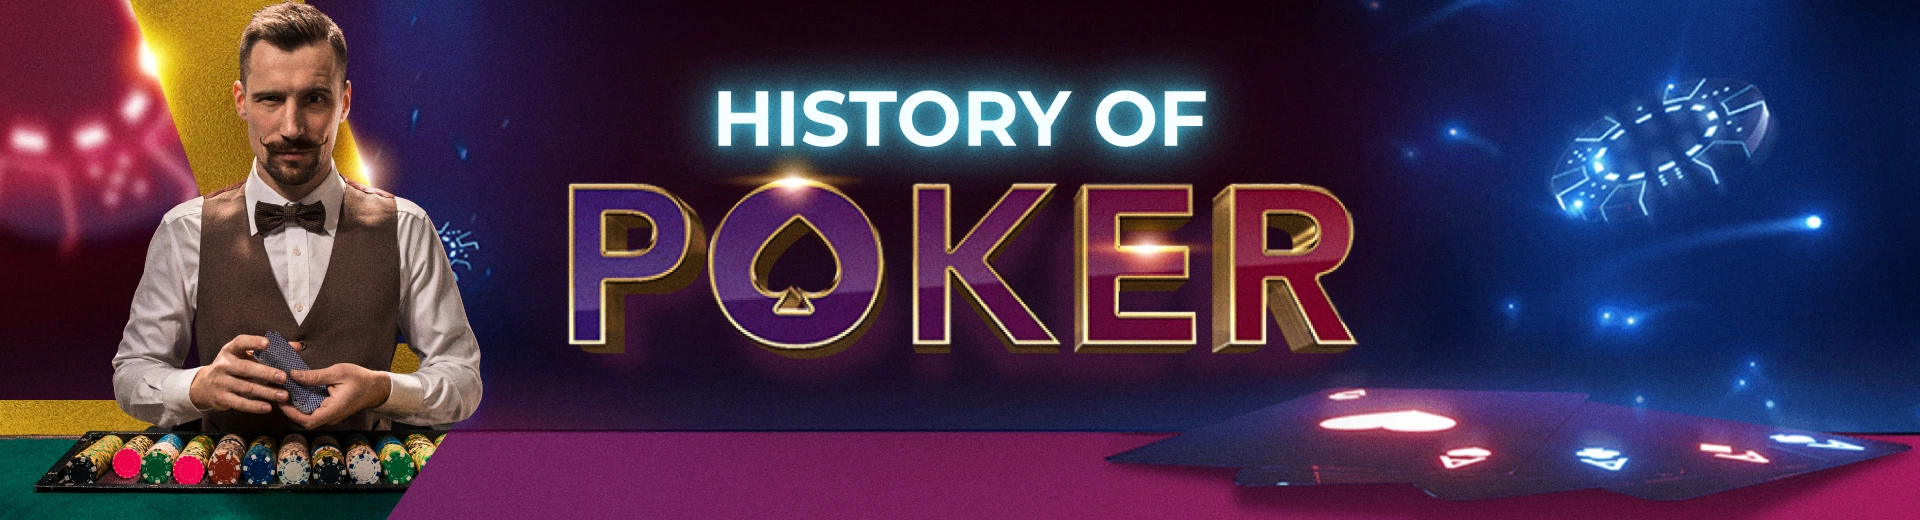 Interesting Facts about the History of Poker in OKBET Online - OKBET live casino